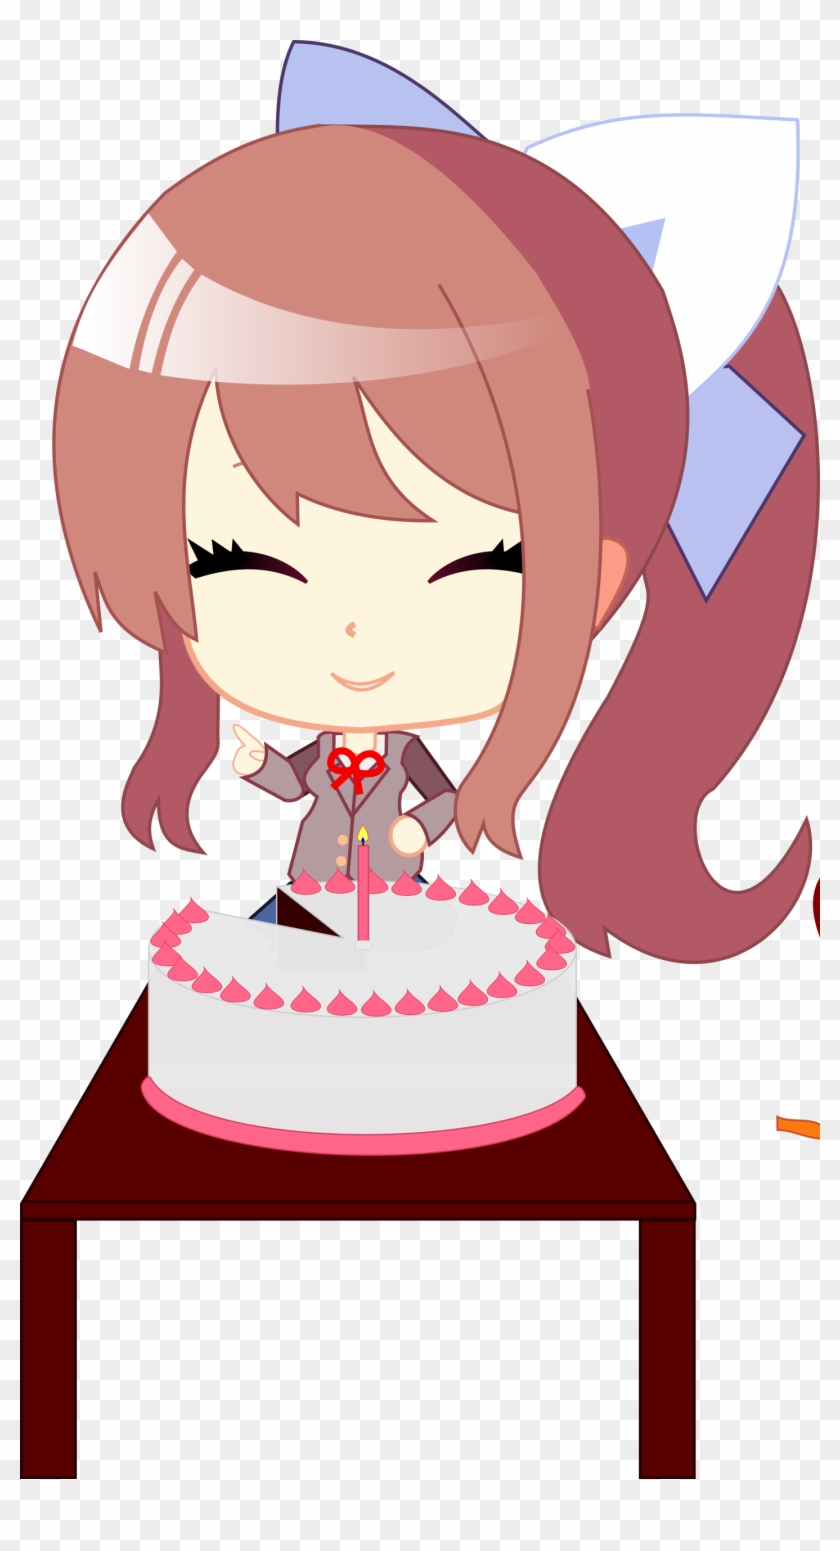 Monika And The Cake - Doki Doki Chibi Characters Clipart #4414824